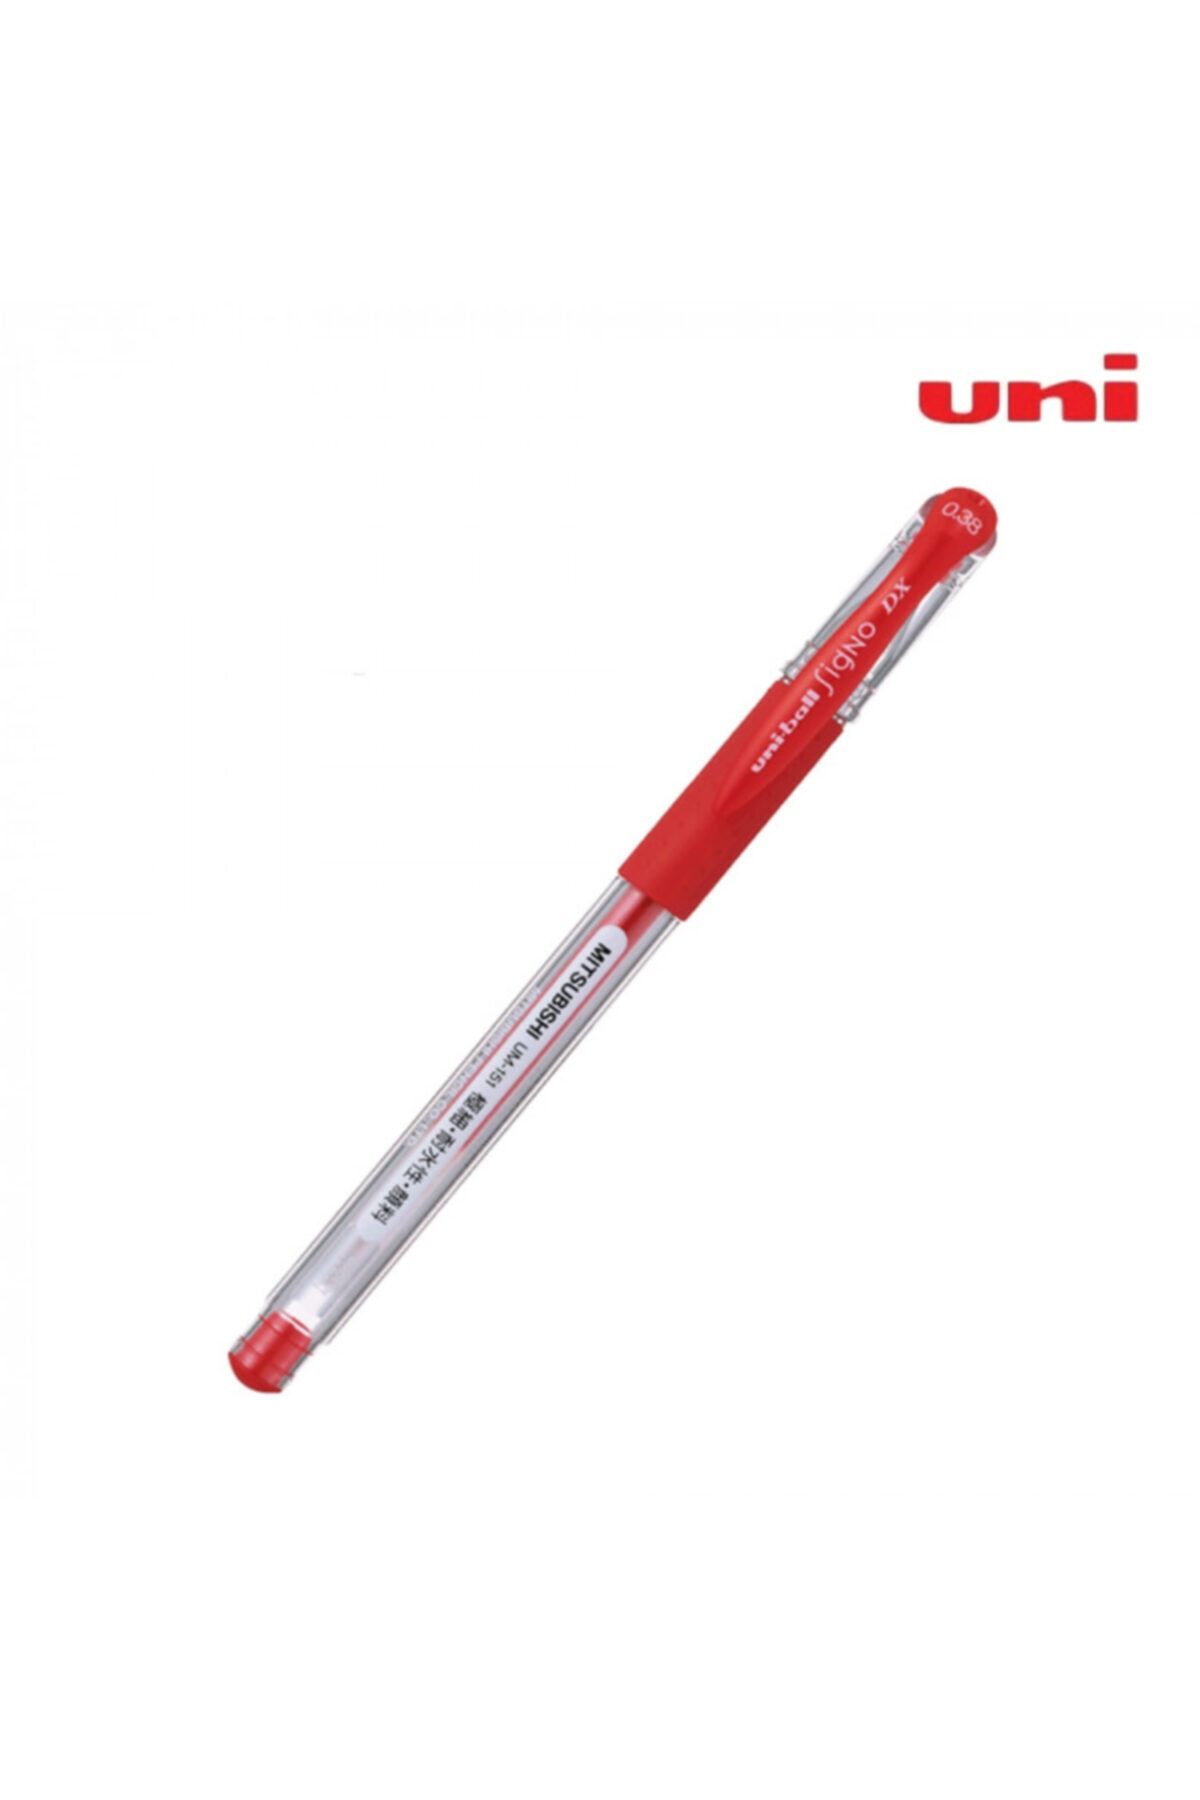 uni-ball Um-151nd Roller Kalem Signo Needle Iğne Uç 0.38 Mm Kırmızı (10 Lu Kutu)